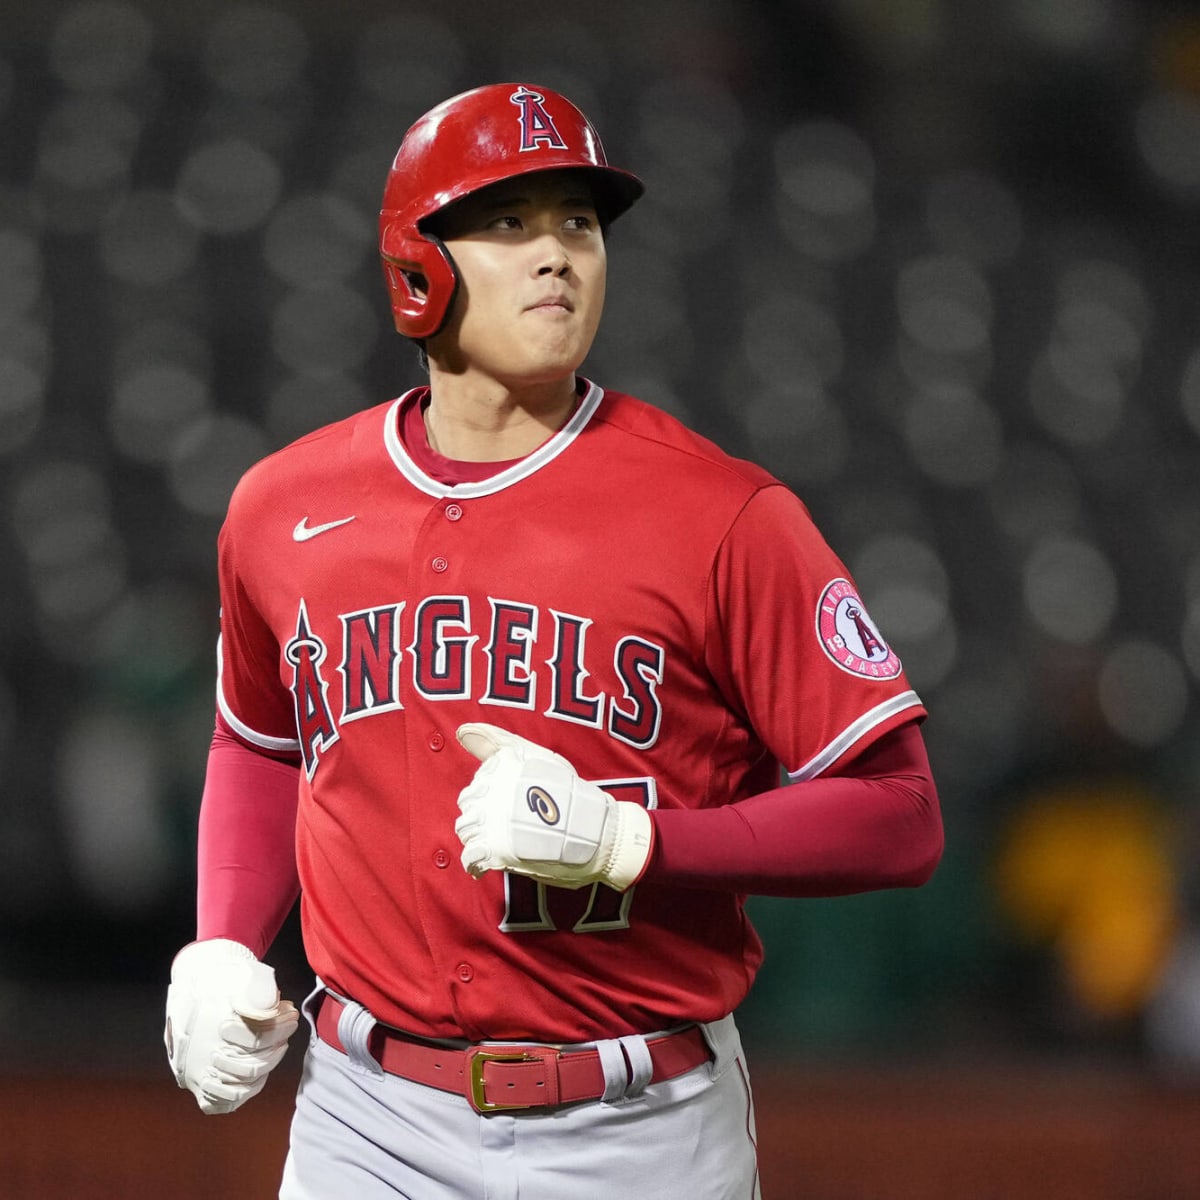 Ronald Acuña Jr., Shohei Ohtani Top MLB Most-Popular Jersey Sales